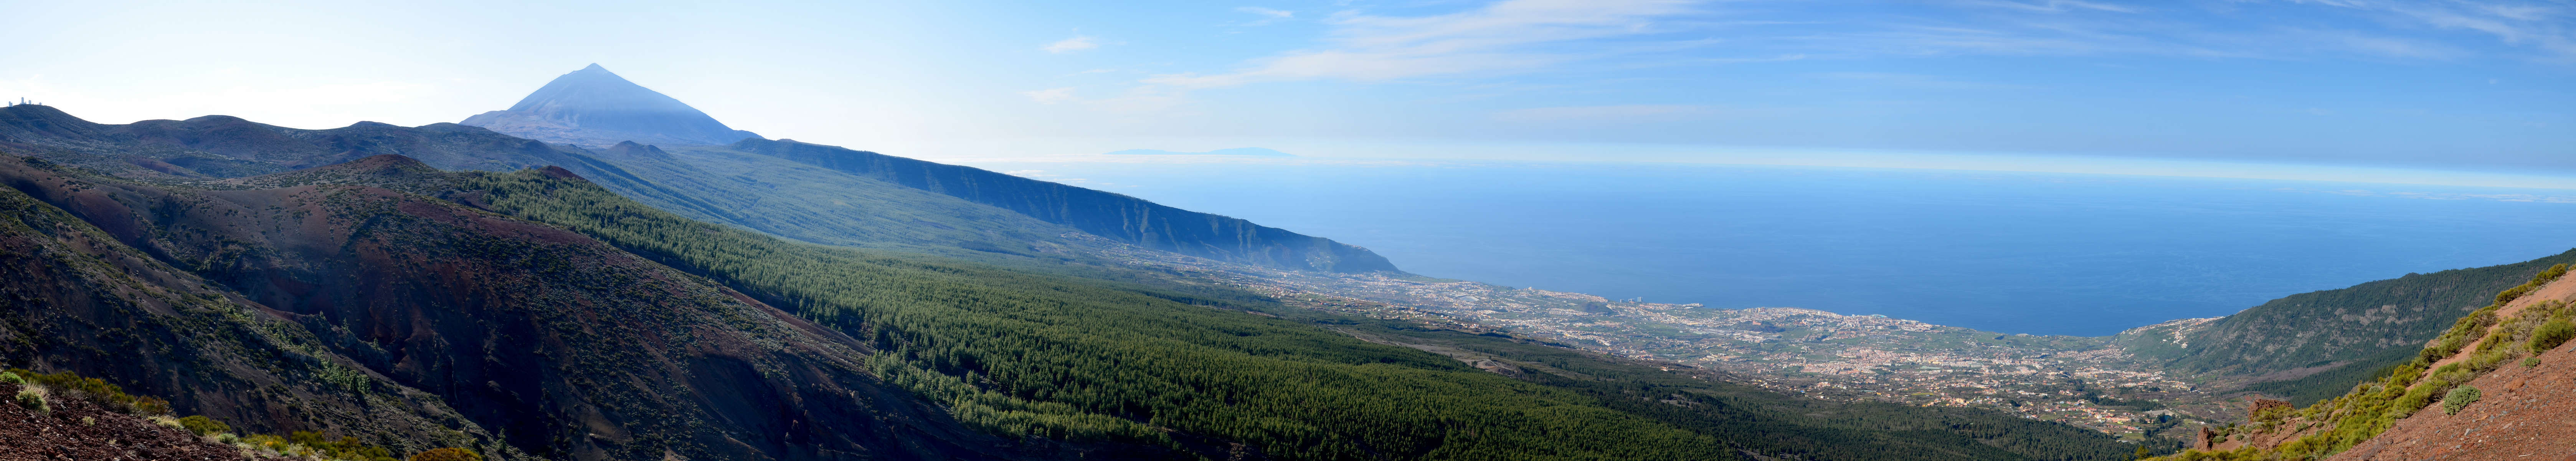 Teide - Tenerife - Canary Islands.jpg